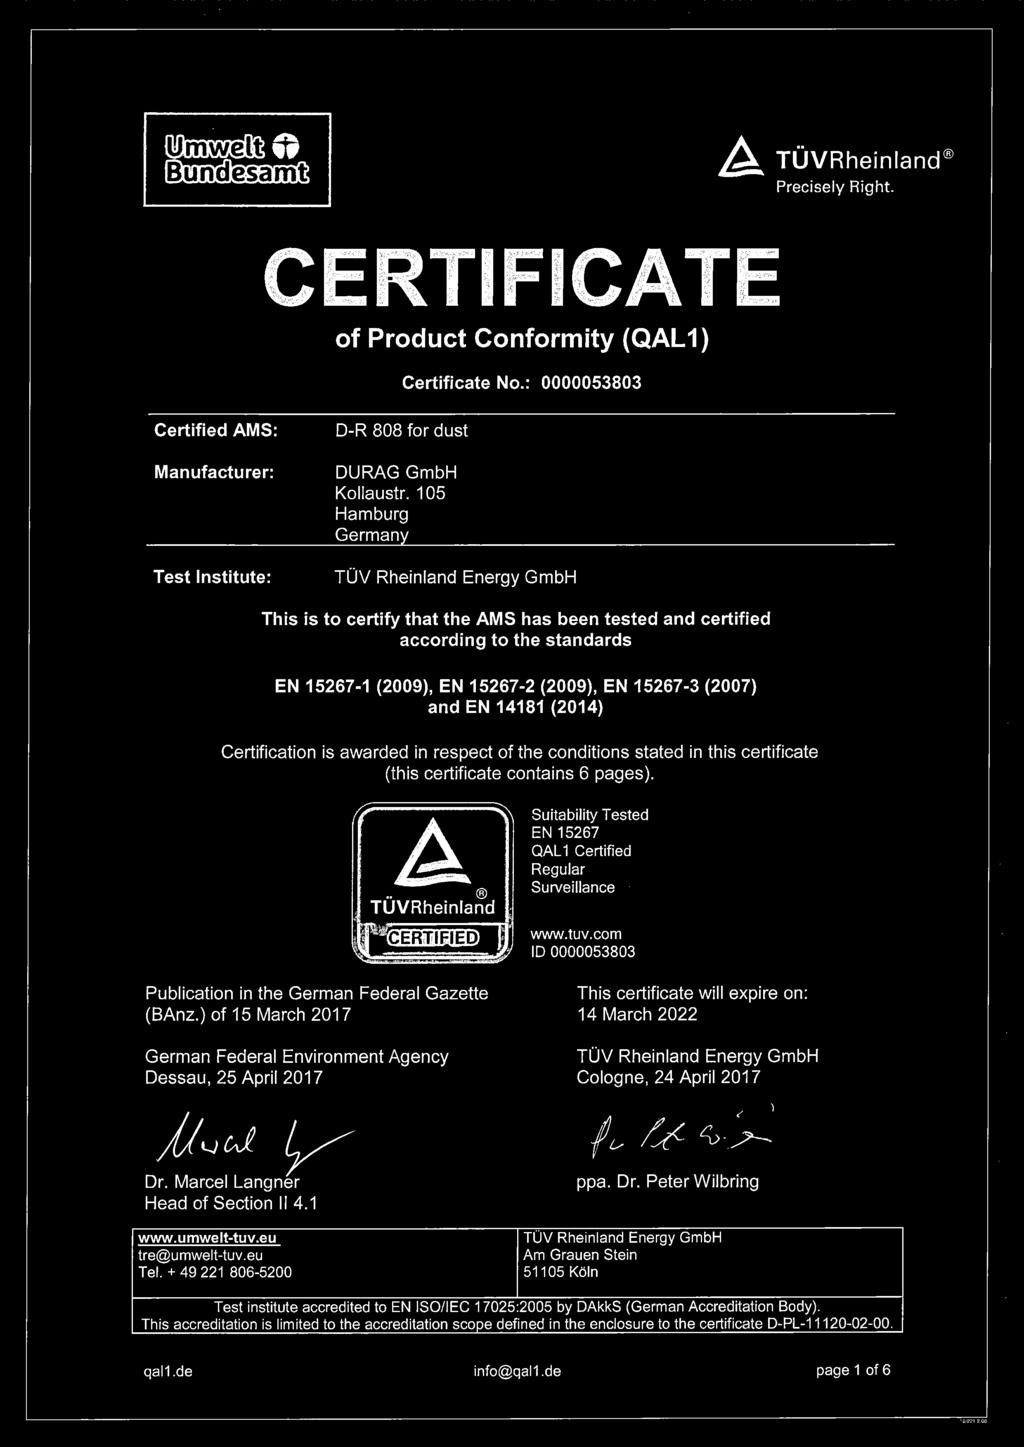 umwelt-tuv.eu tre@umwelt-tuv.eu Tel. + 49 221 806-5200 This certificate will expire on: 14 March 2022 TÜV Rheinland Energy GmbH Cologne, 24 April 2017 / fl u /z< cjppa. Dr.